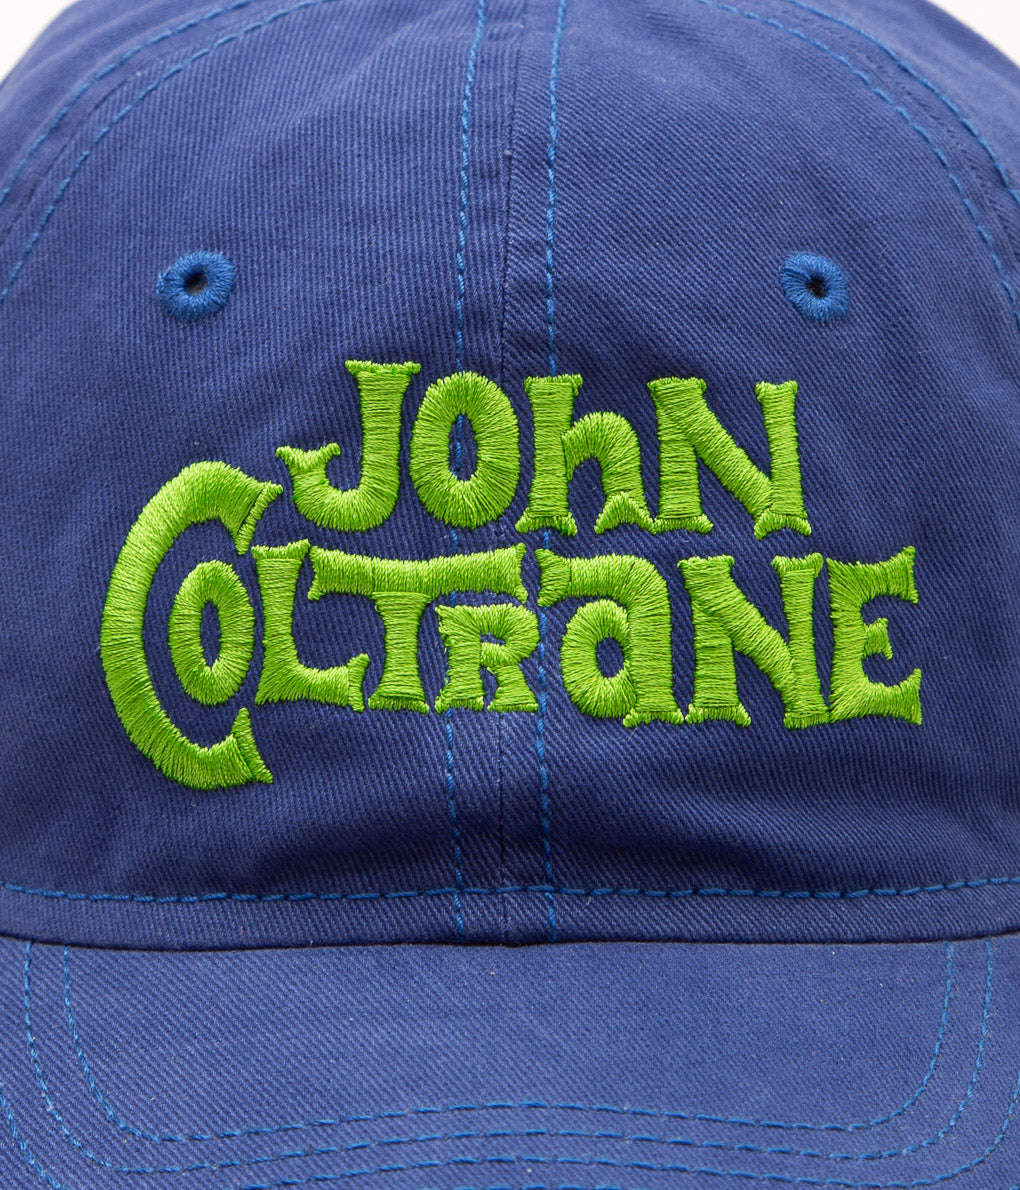 BLUESCENTRIC "JOHN COLTRANE LOGO CAP"(ROYAL)